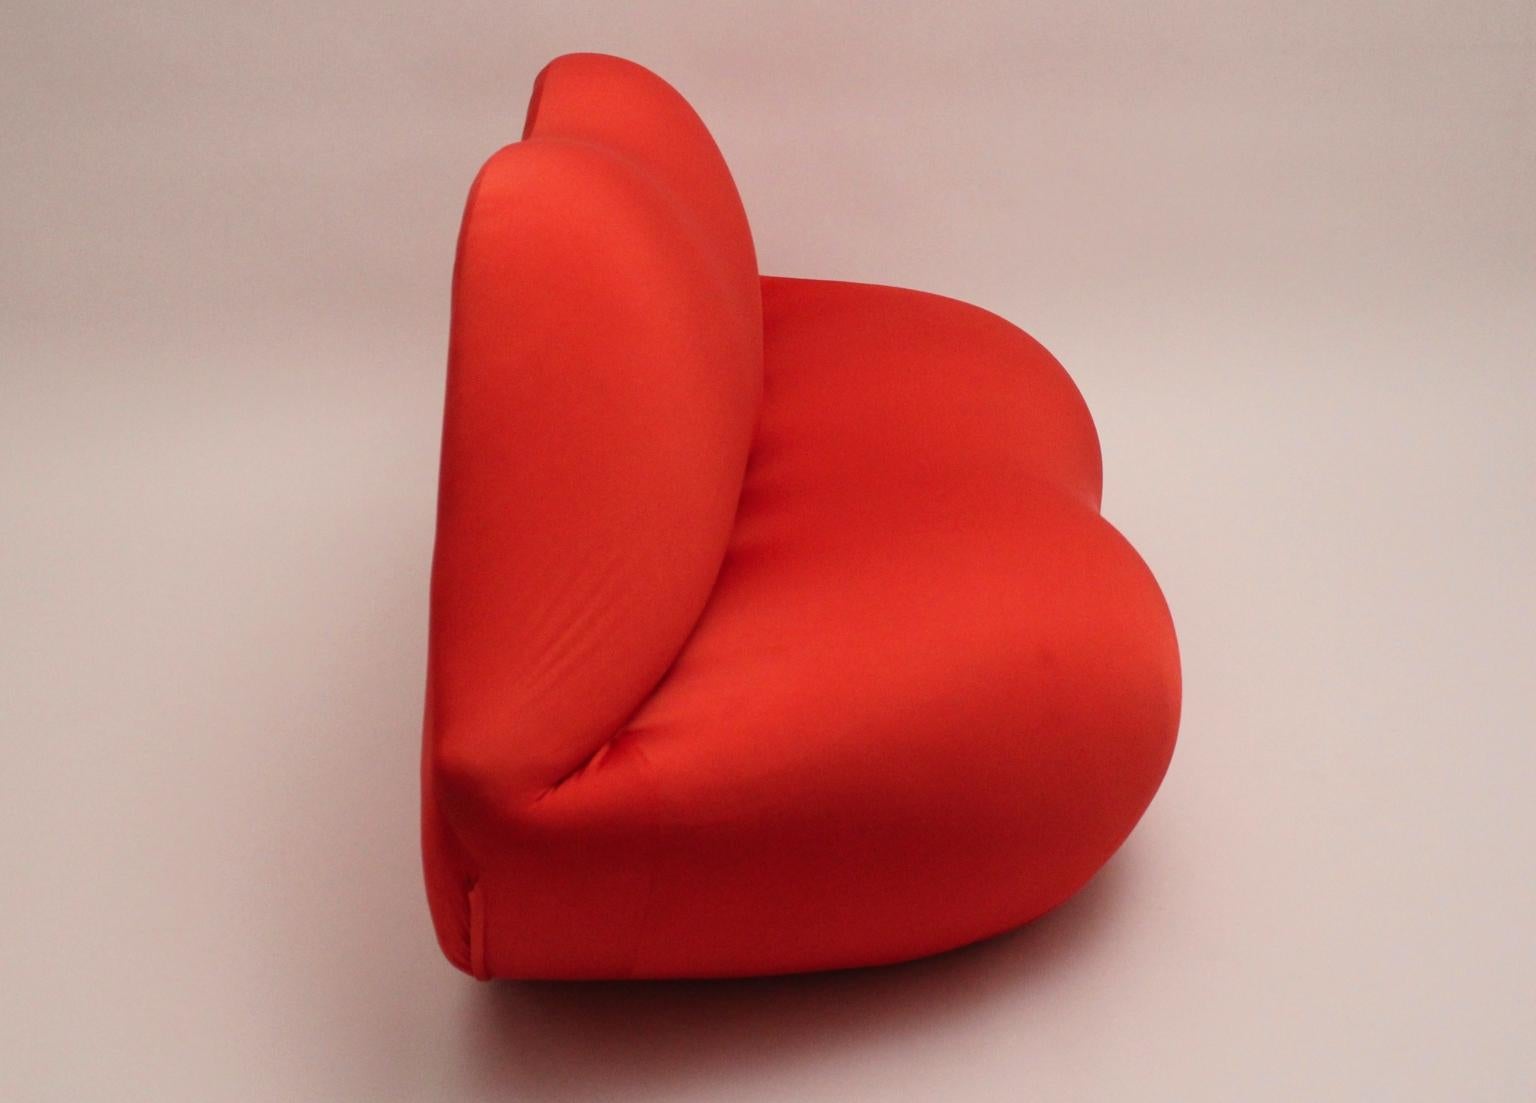 Red La Bocca Pop Art Lips Vintage Sofa Attr. to Studio 65 for Gufram Italy 1970s For Sale 3